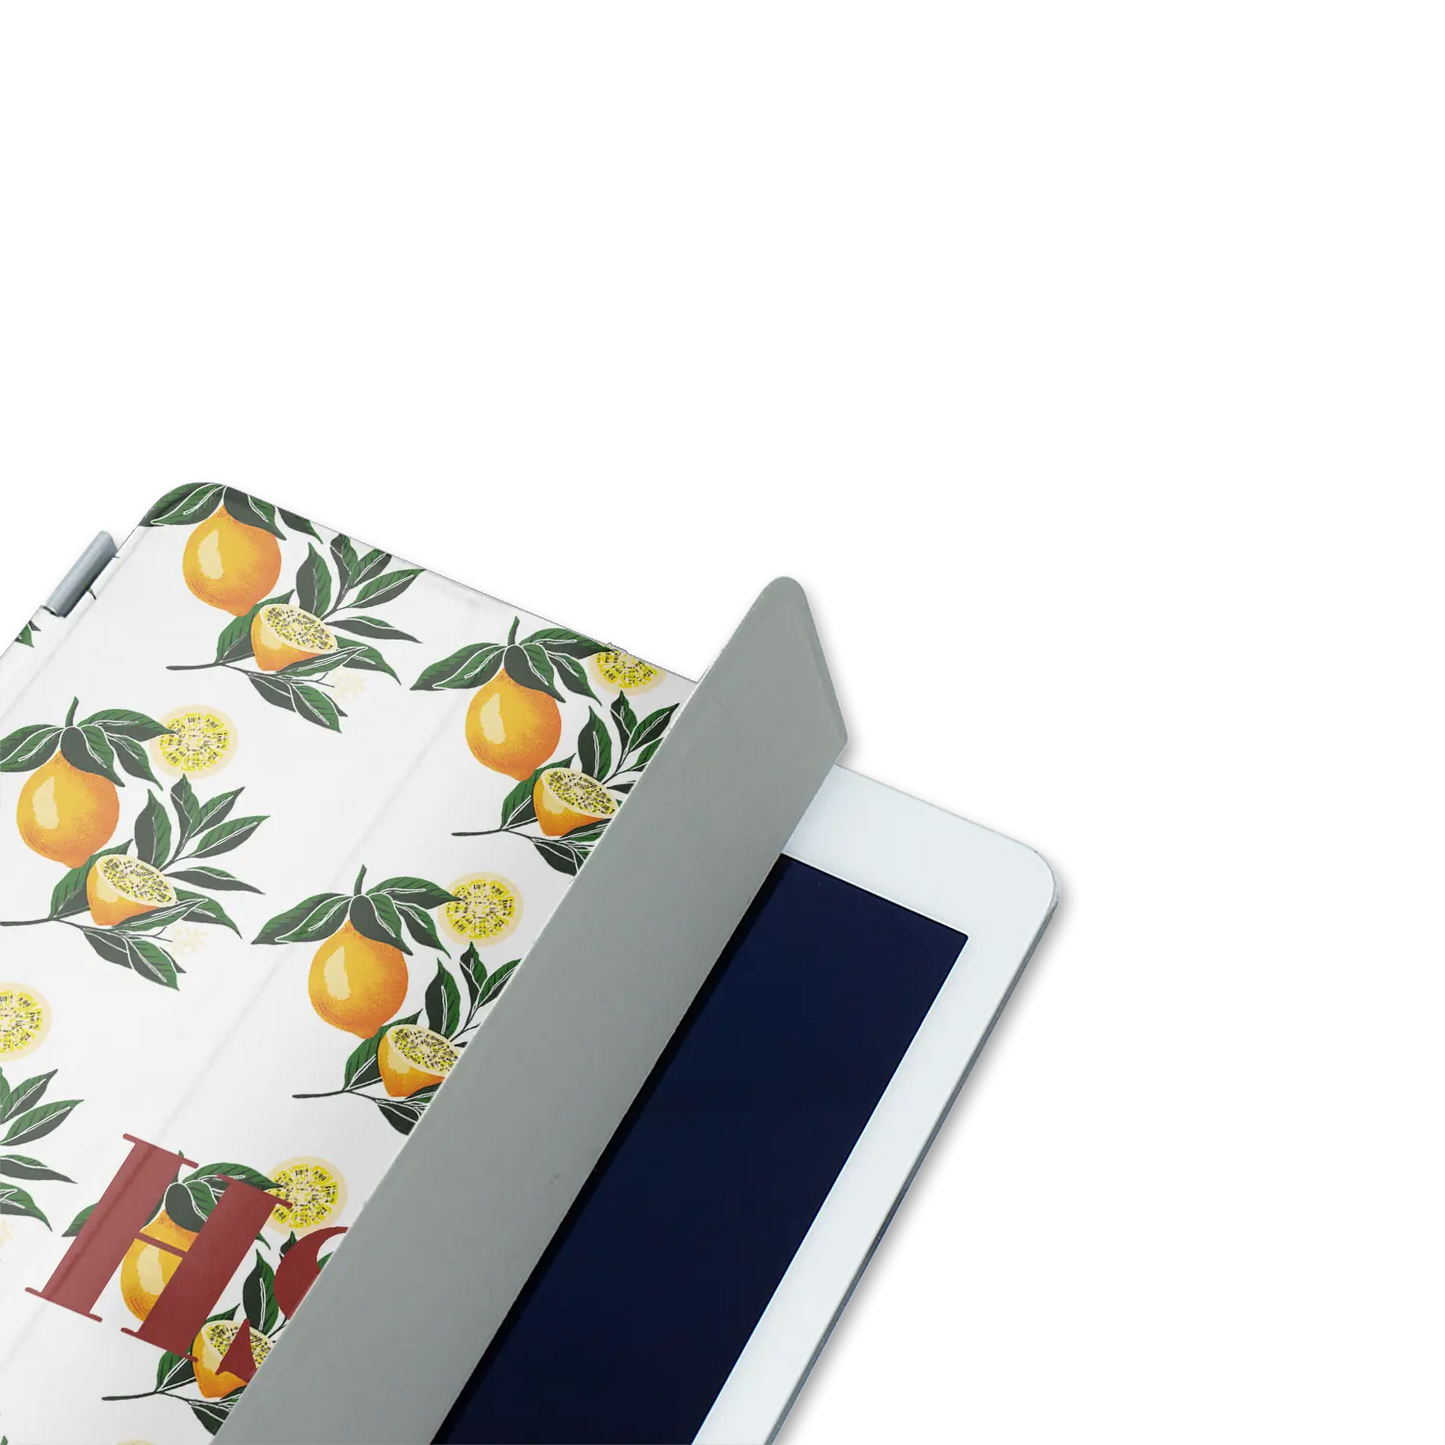 Lemon pattern - Custom iPad Case